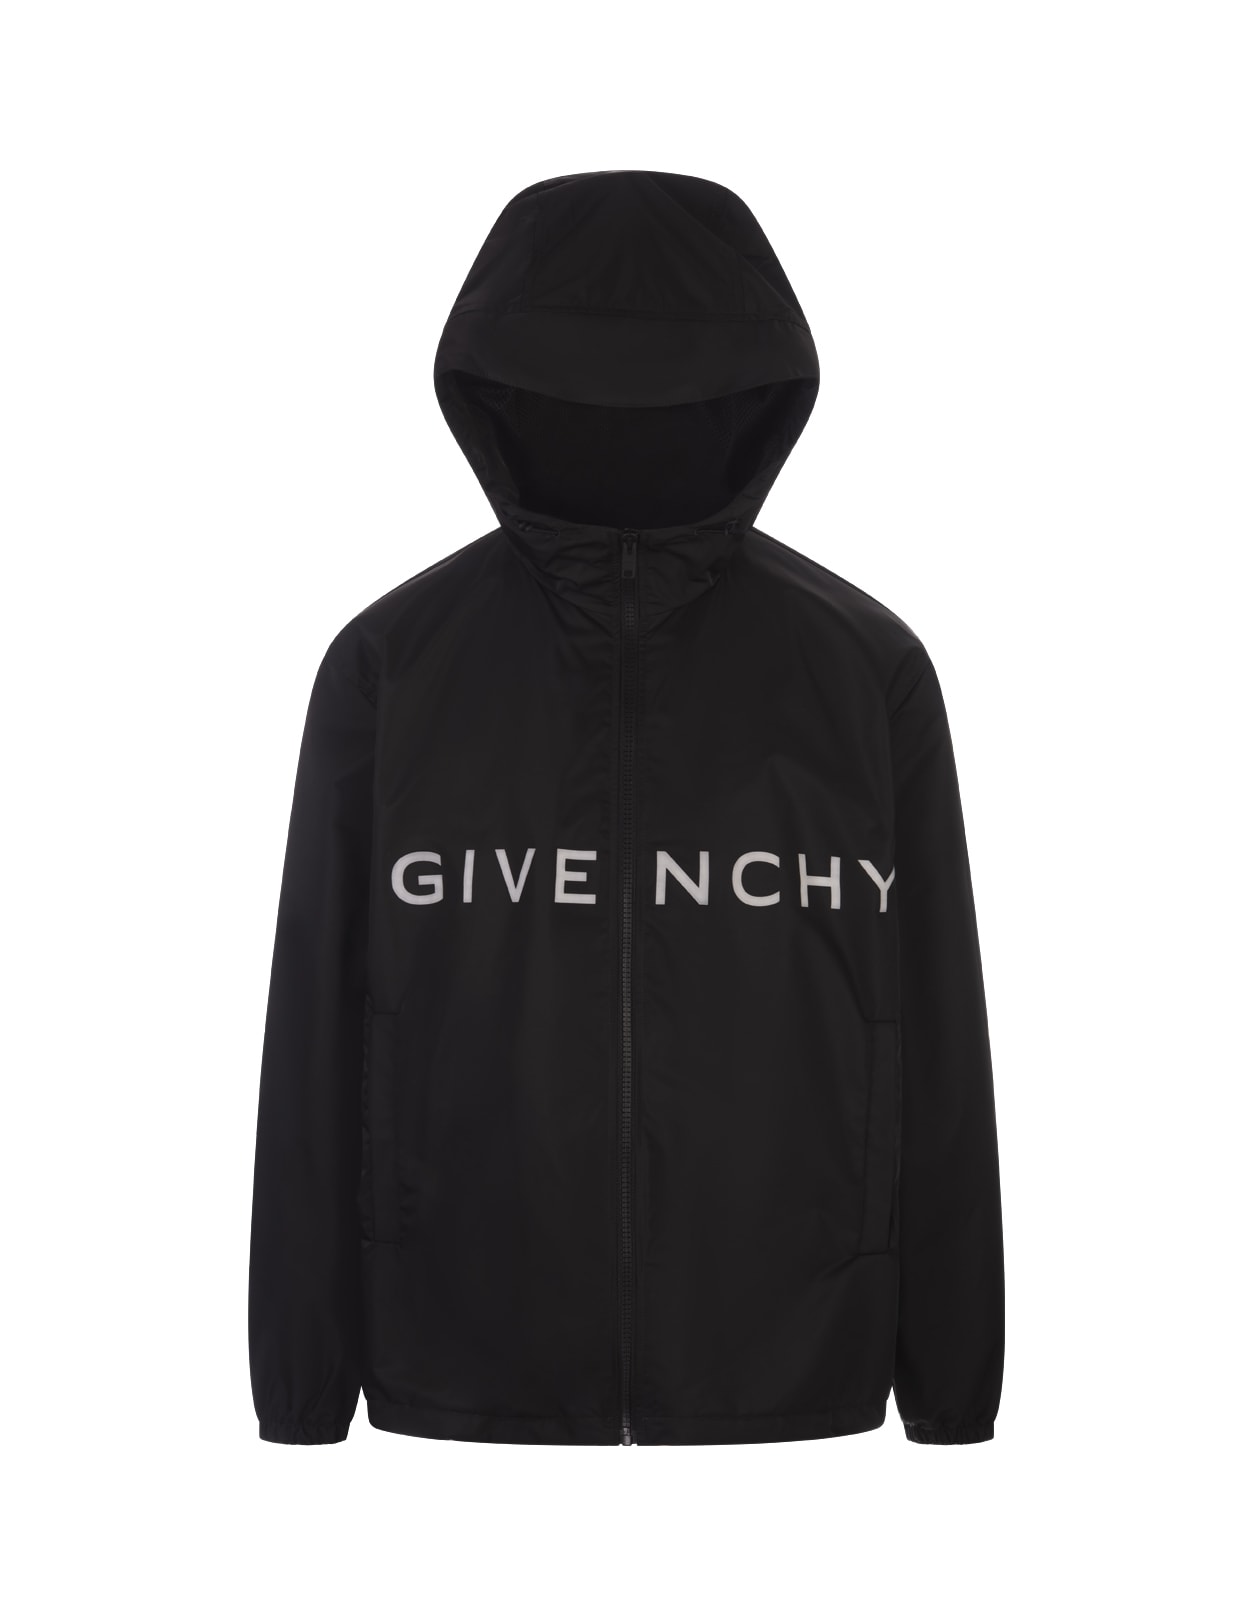 Givenchy Black Technical Fabric Windbreaker Jacket